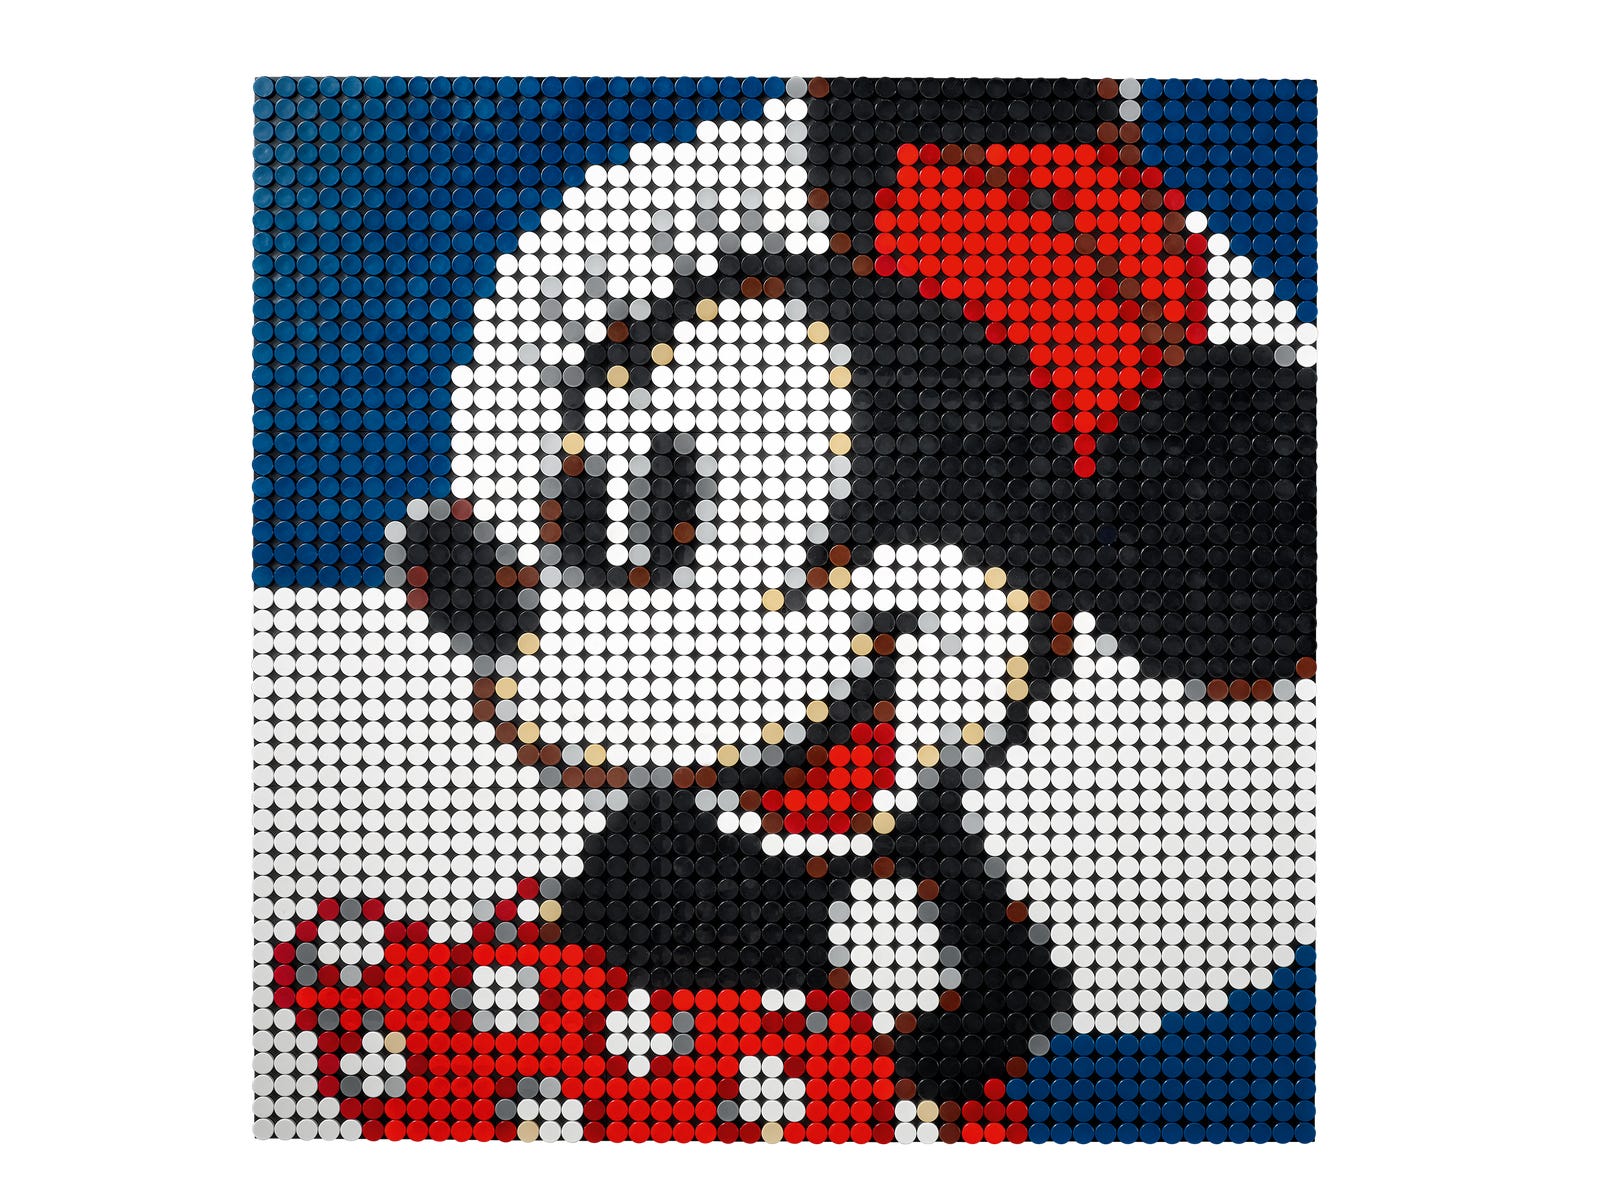 LEGO Art Disney's Mickey Mouse 31202